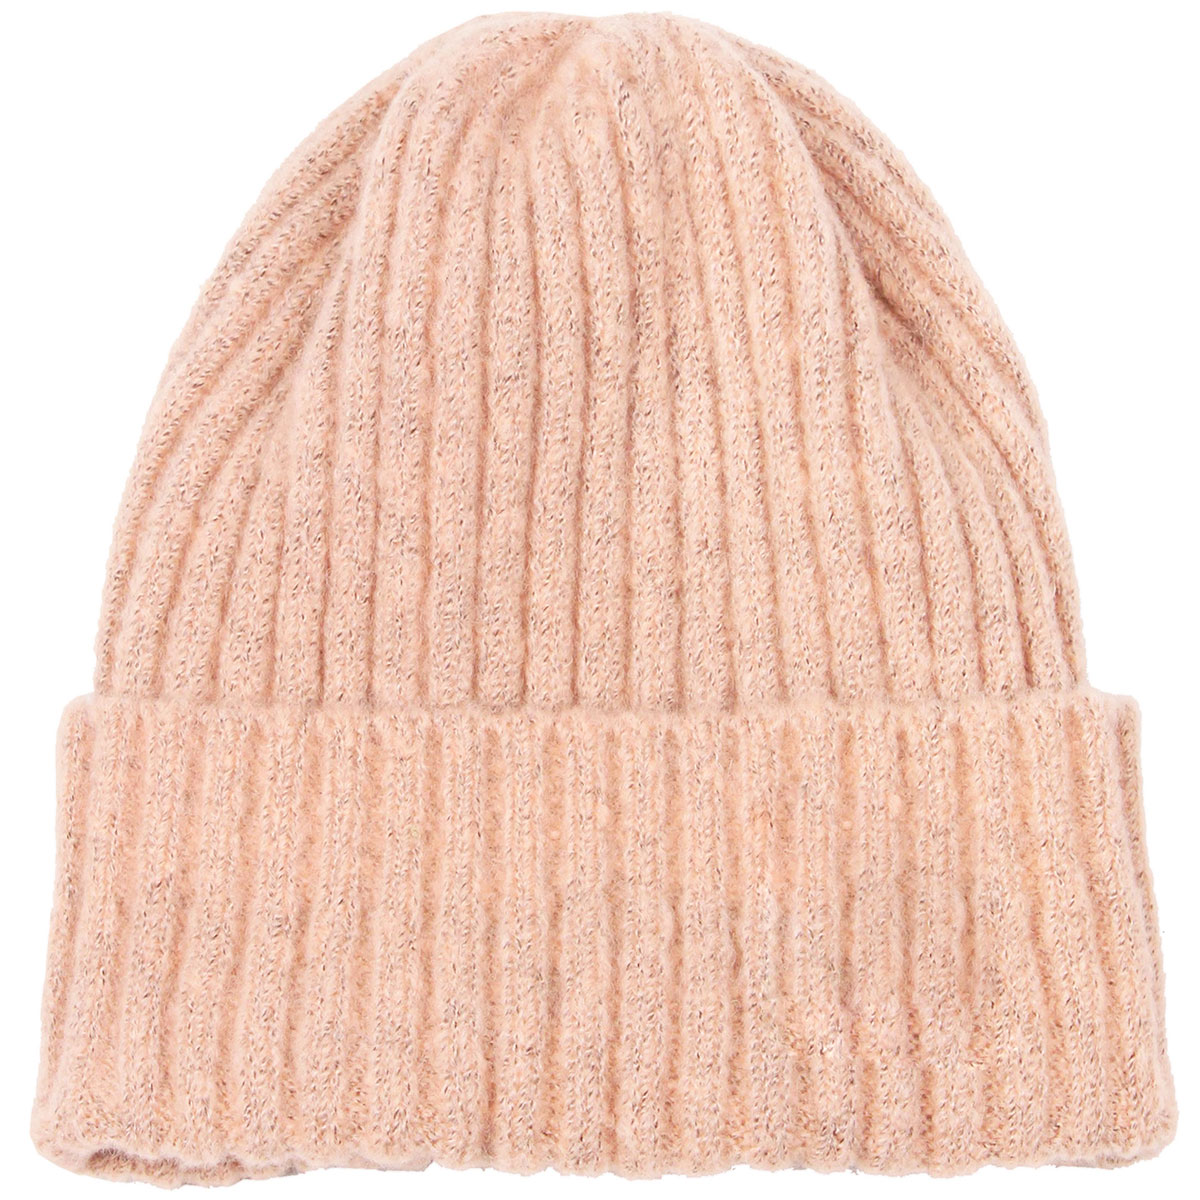 9551 Knit Beanie Cuff Style - Pink